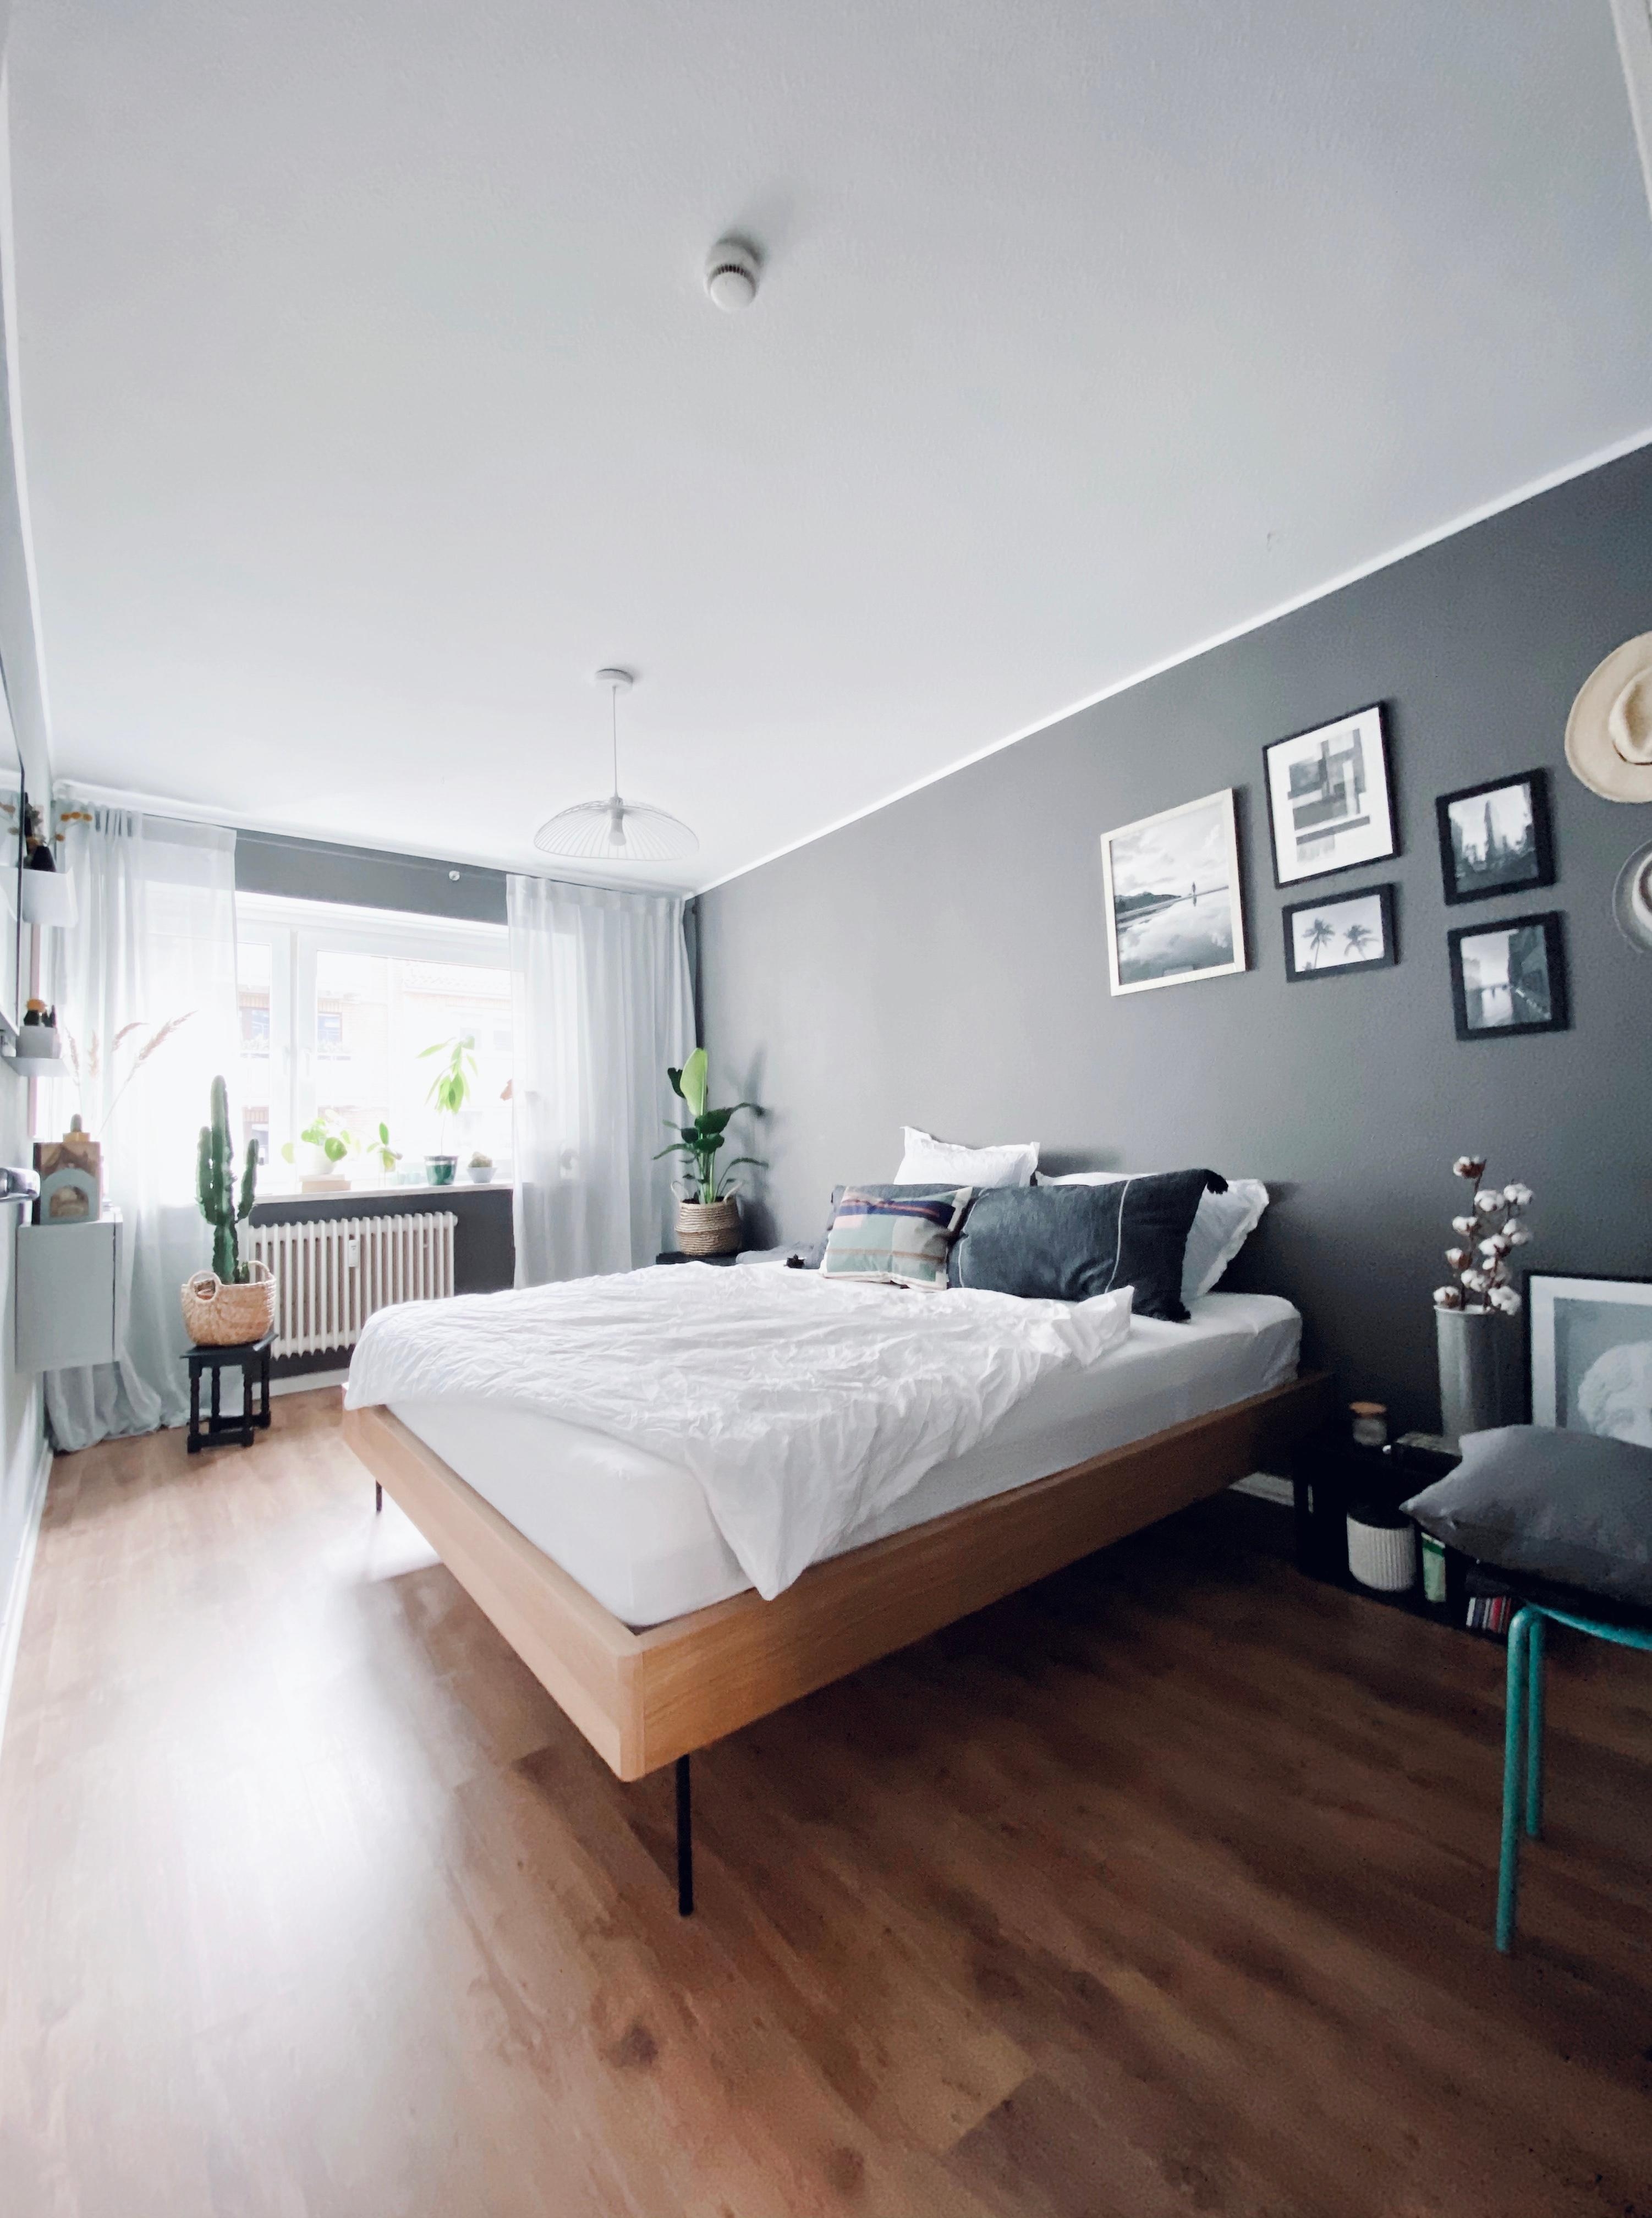 #bedroom #mynordicroom #interior #weitwinkel #monochrome #minimalism #hygge #bedroominspo #plantlover